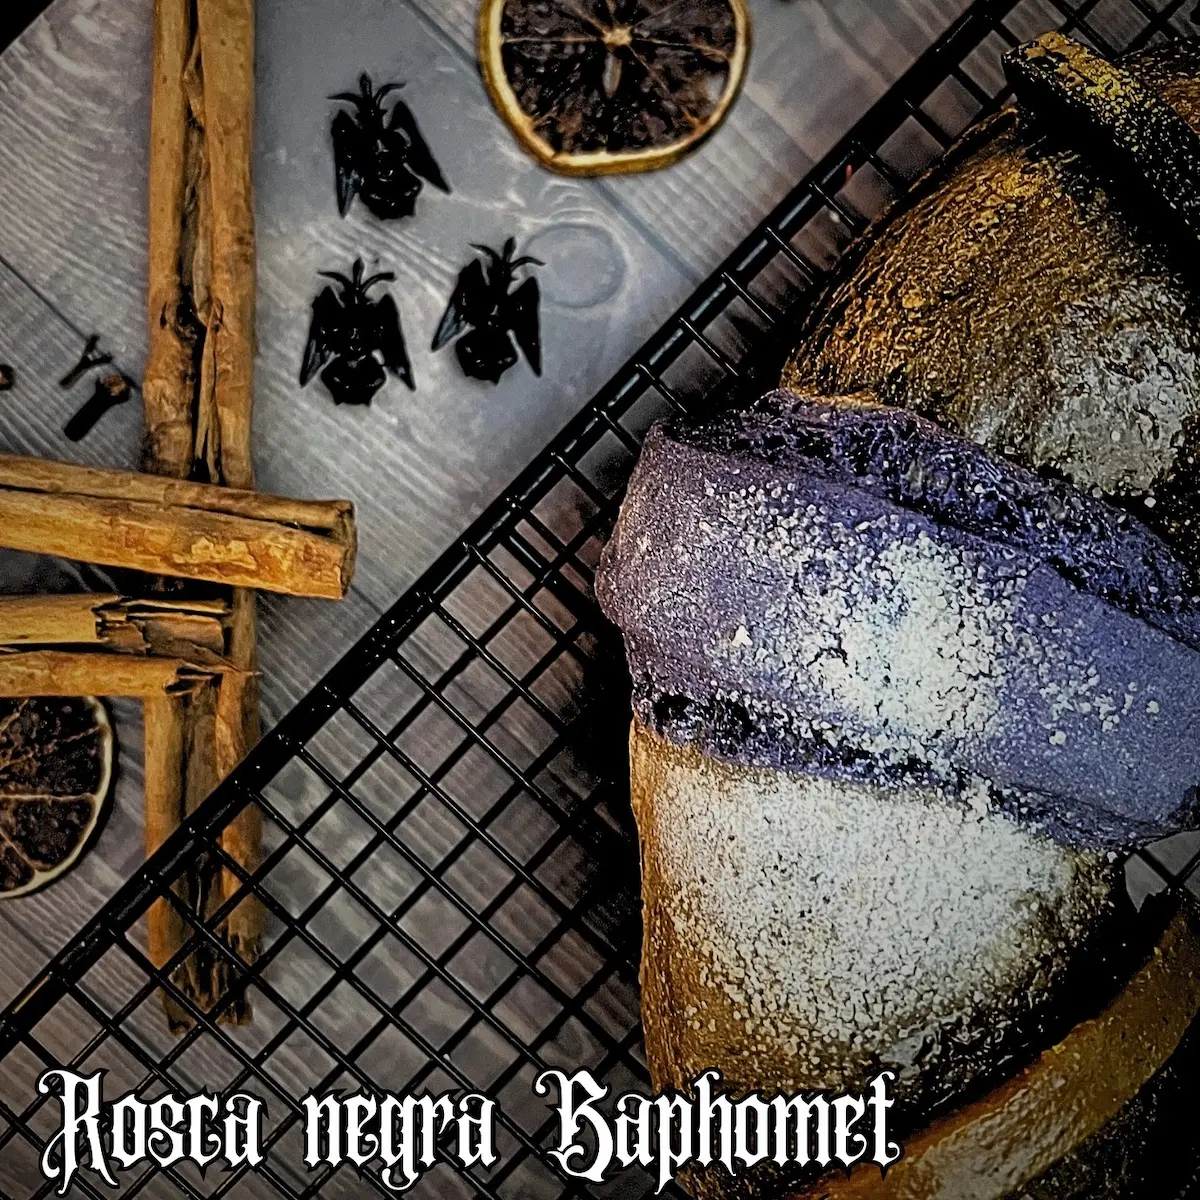 Rosca Baphomet, The Addams House Coffee